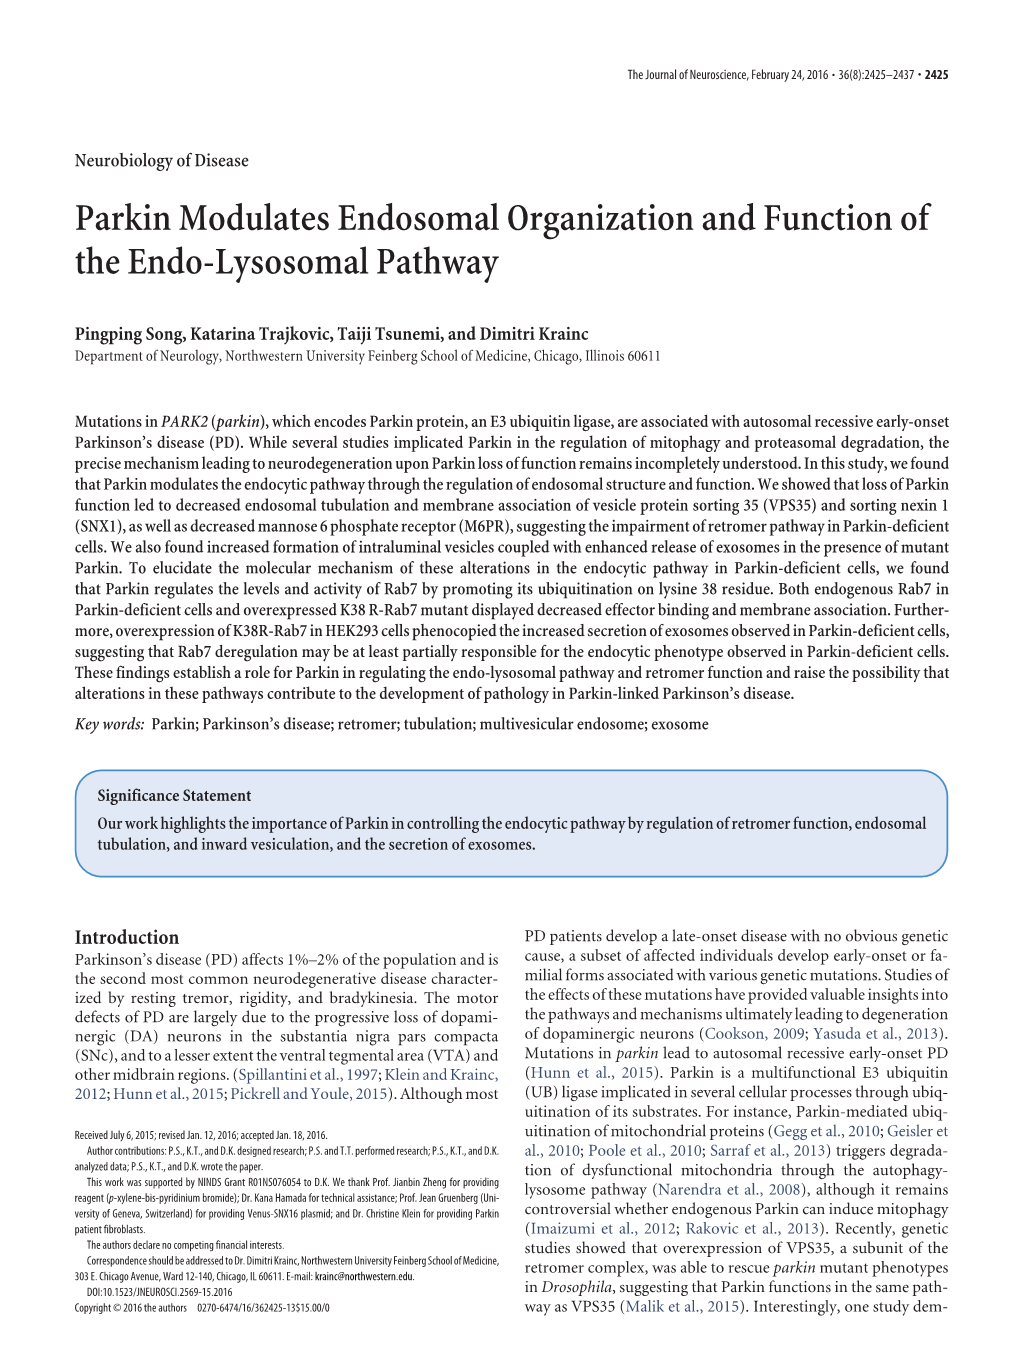 Parkin Modulates Endosomal Organization and Function of the Endo-Lysosomal Pathway